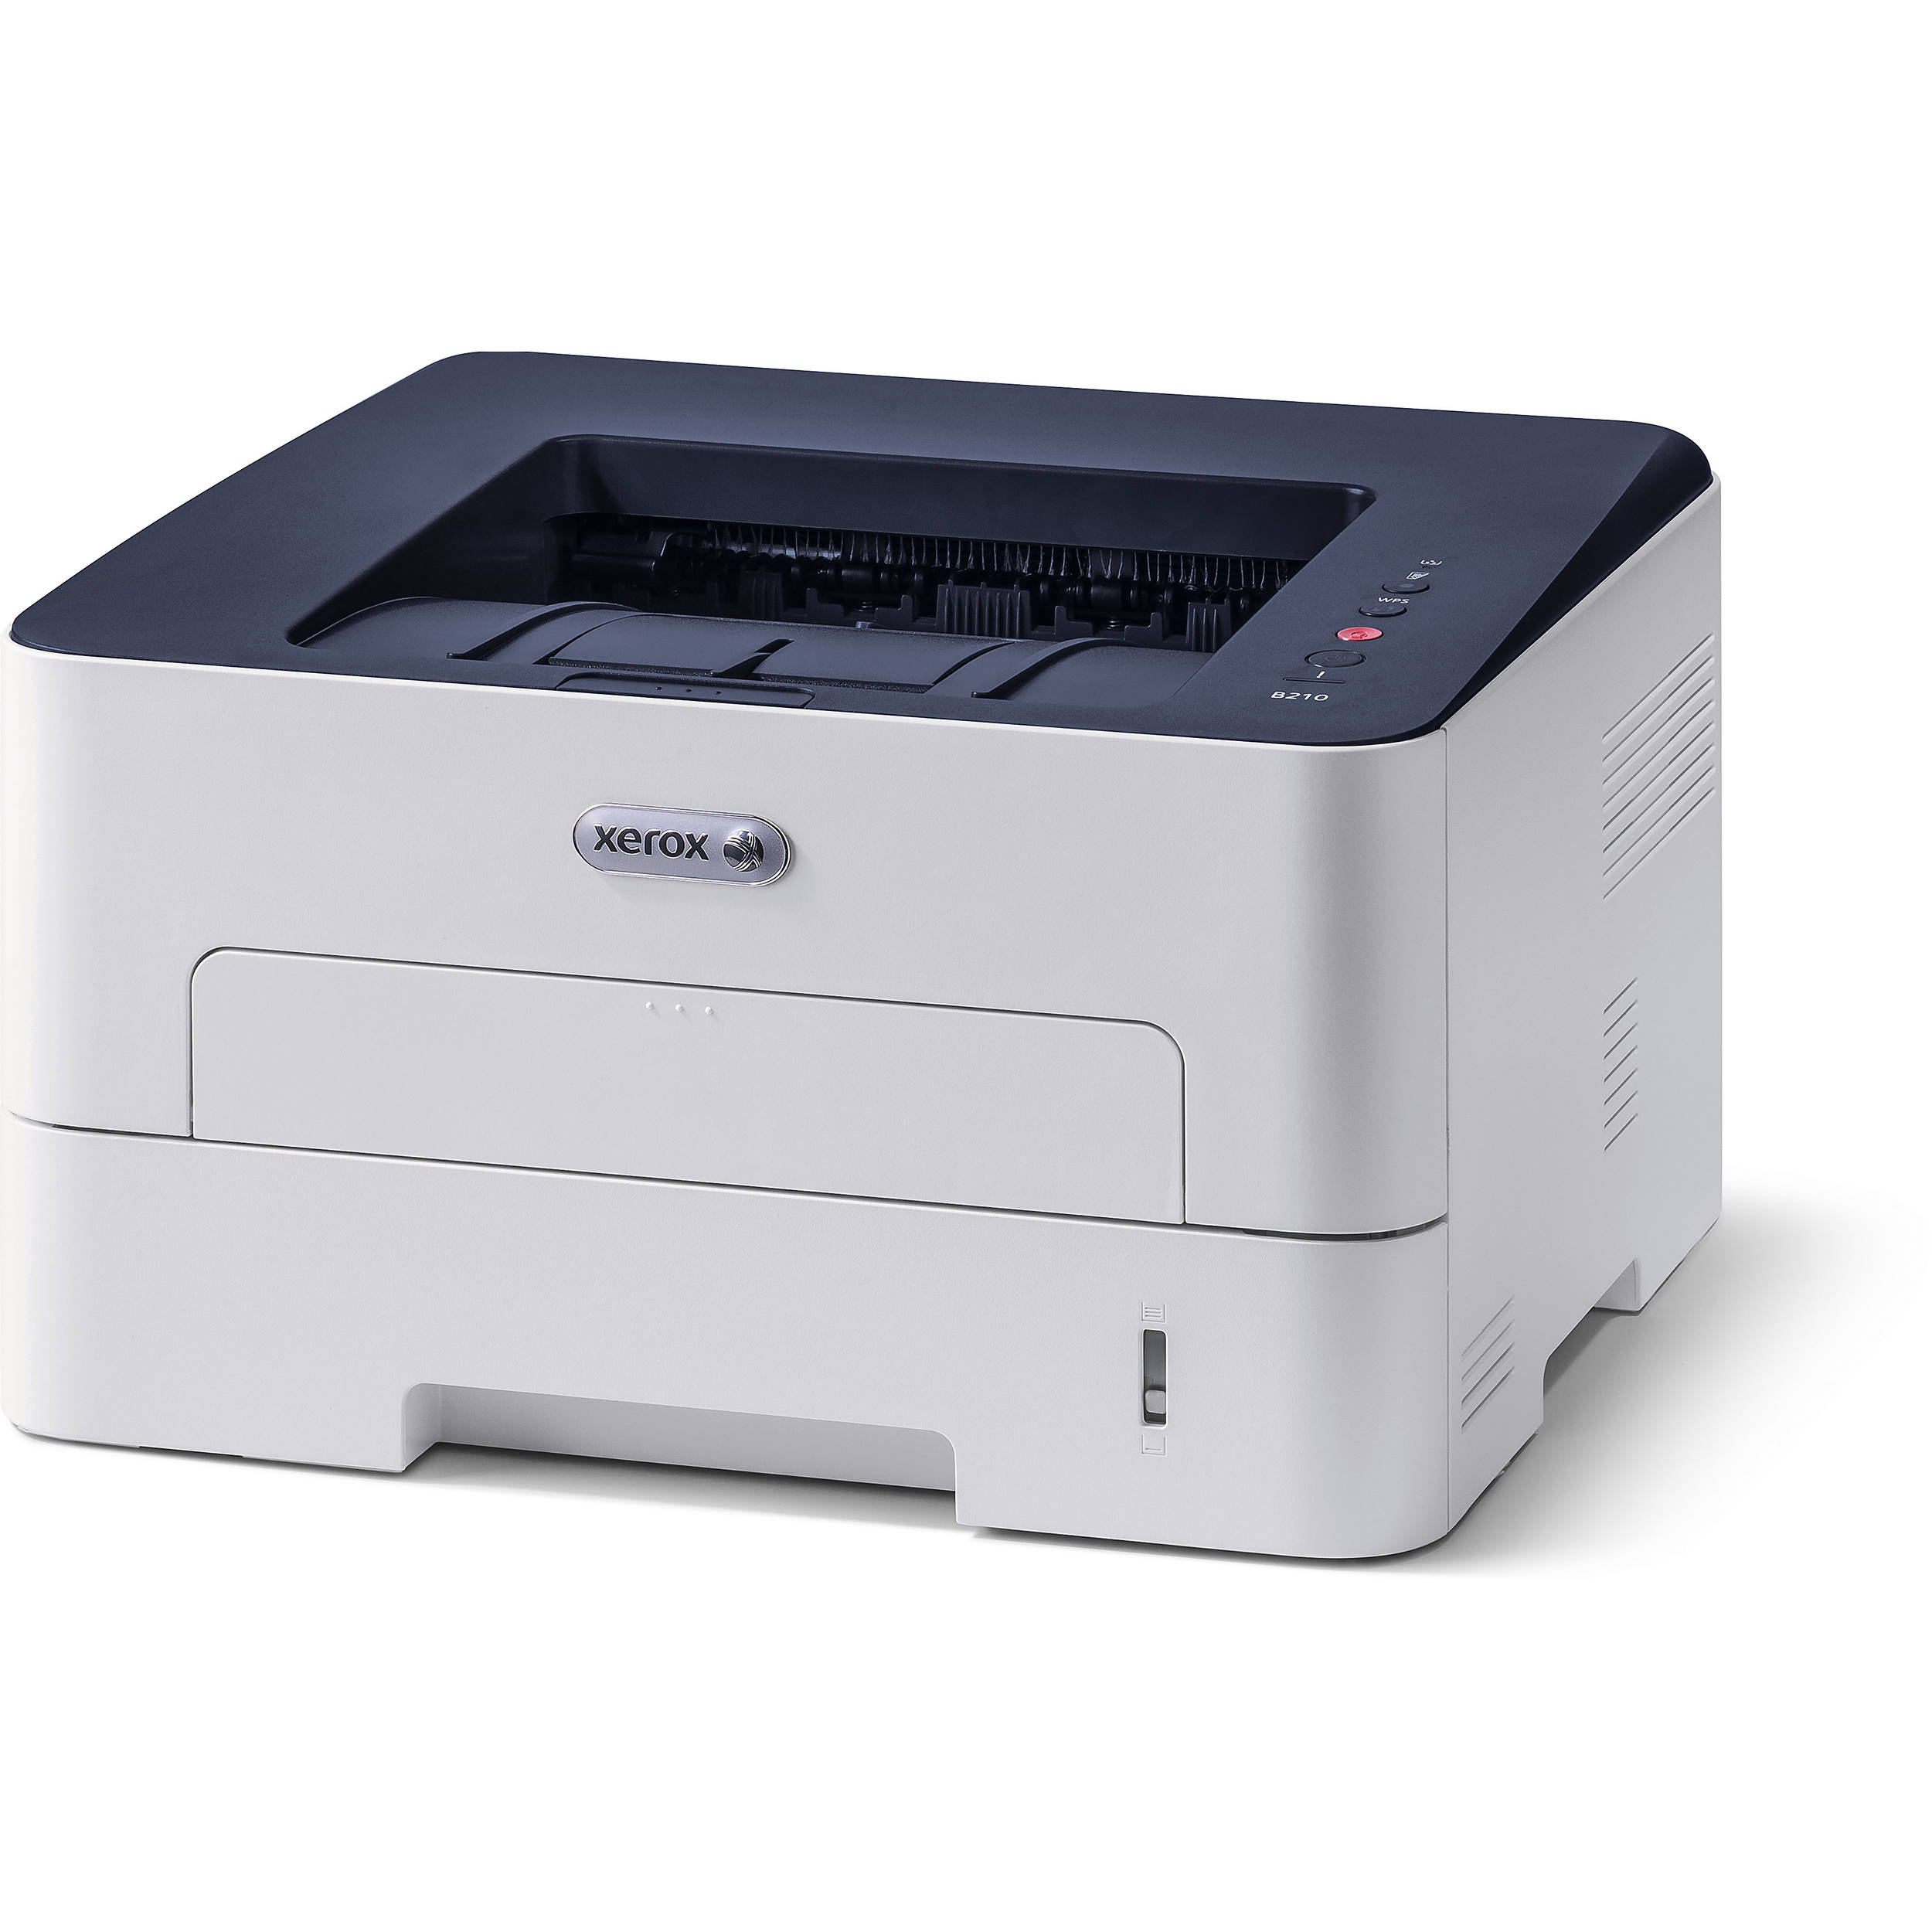 Купить принтер xerox phaser 3020. Принтер лазерный Xerox Phaser 3020bi. Принтер Xerox b210dni. Принтер Xerox Phaser 3052ni. Принтер Xerox b210 (b210dni).